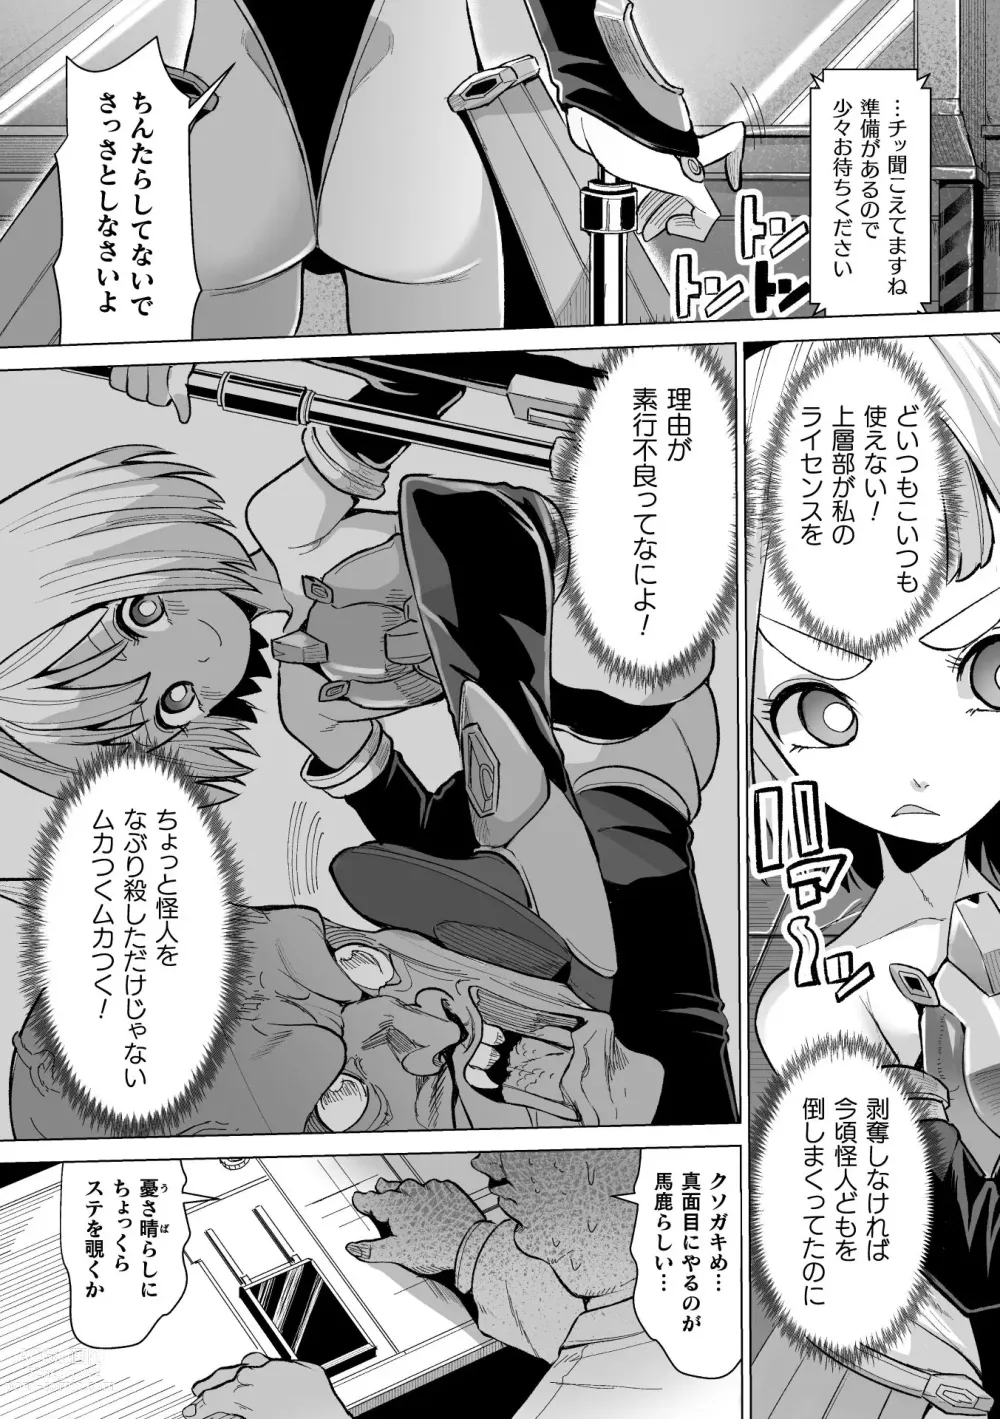 Page 6 of manga Mesugaki mitchiri ecchi